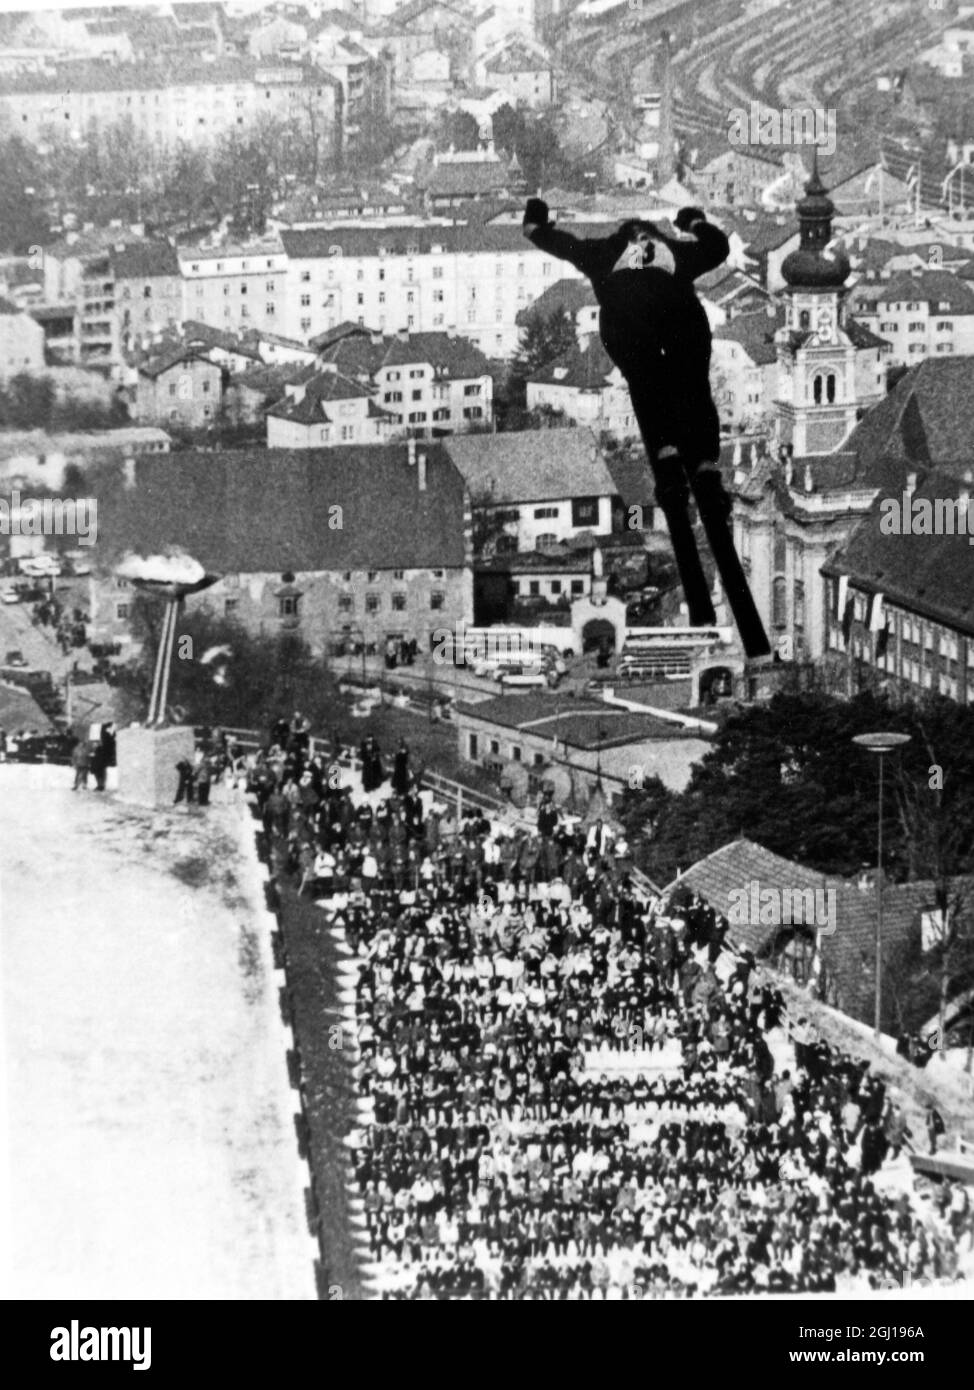 JUMPER DI SCI PETER ERZEN IN AZIONE A INNSBRUCK DURANTE LE OLIMPIADI INVERNALI IN AUSTRIA - ; 9 FEBBRAIO 1964 Foto Stock